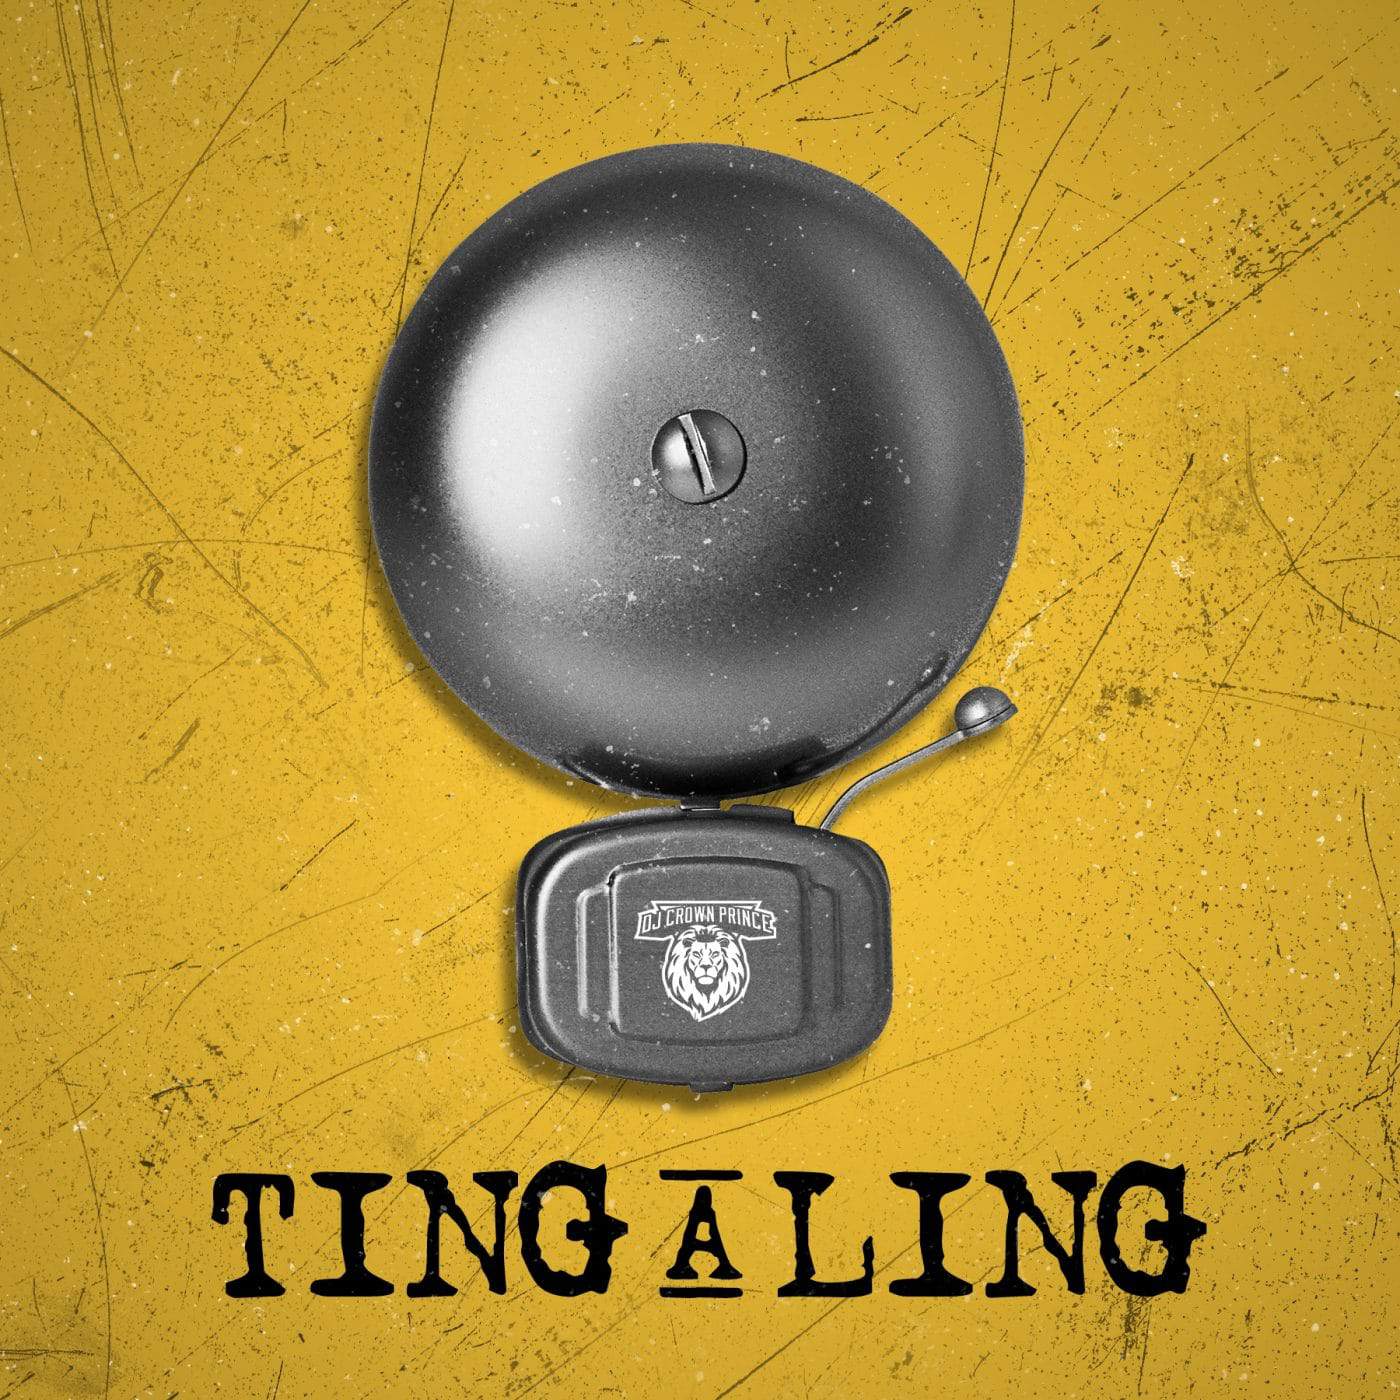 Dj Crown Prince Presents Ting A Ling - 